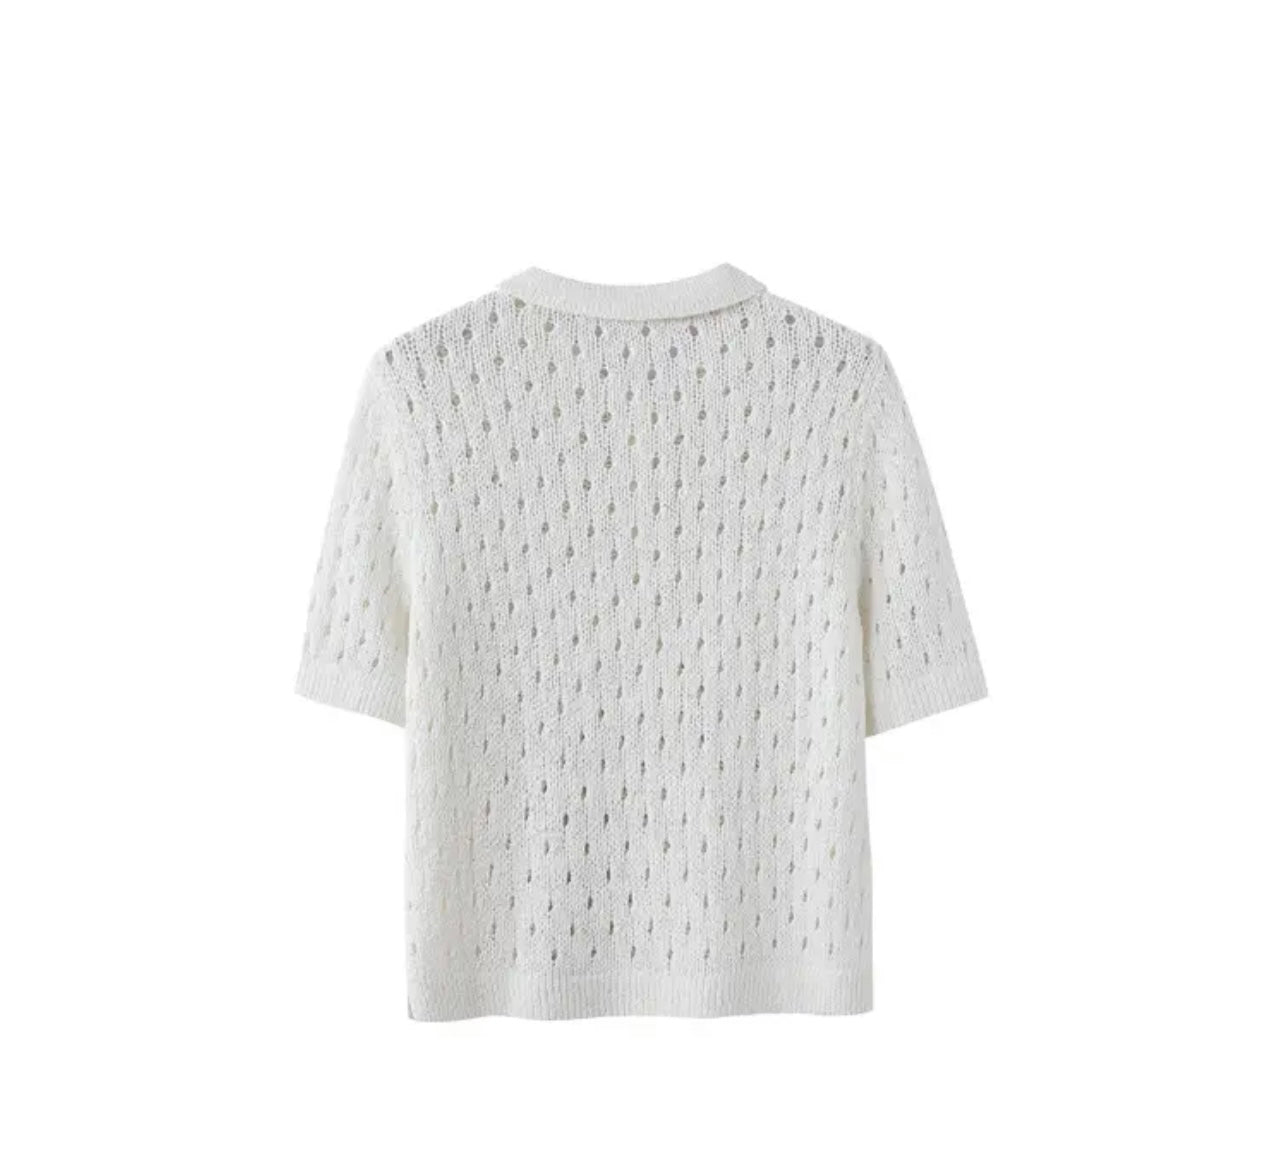 COCO Knitting shirt